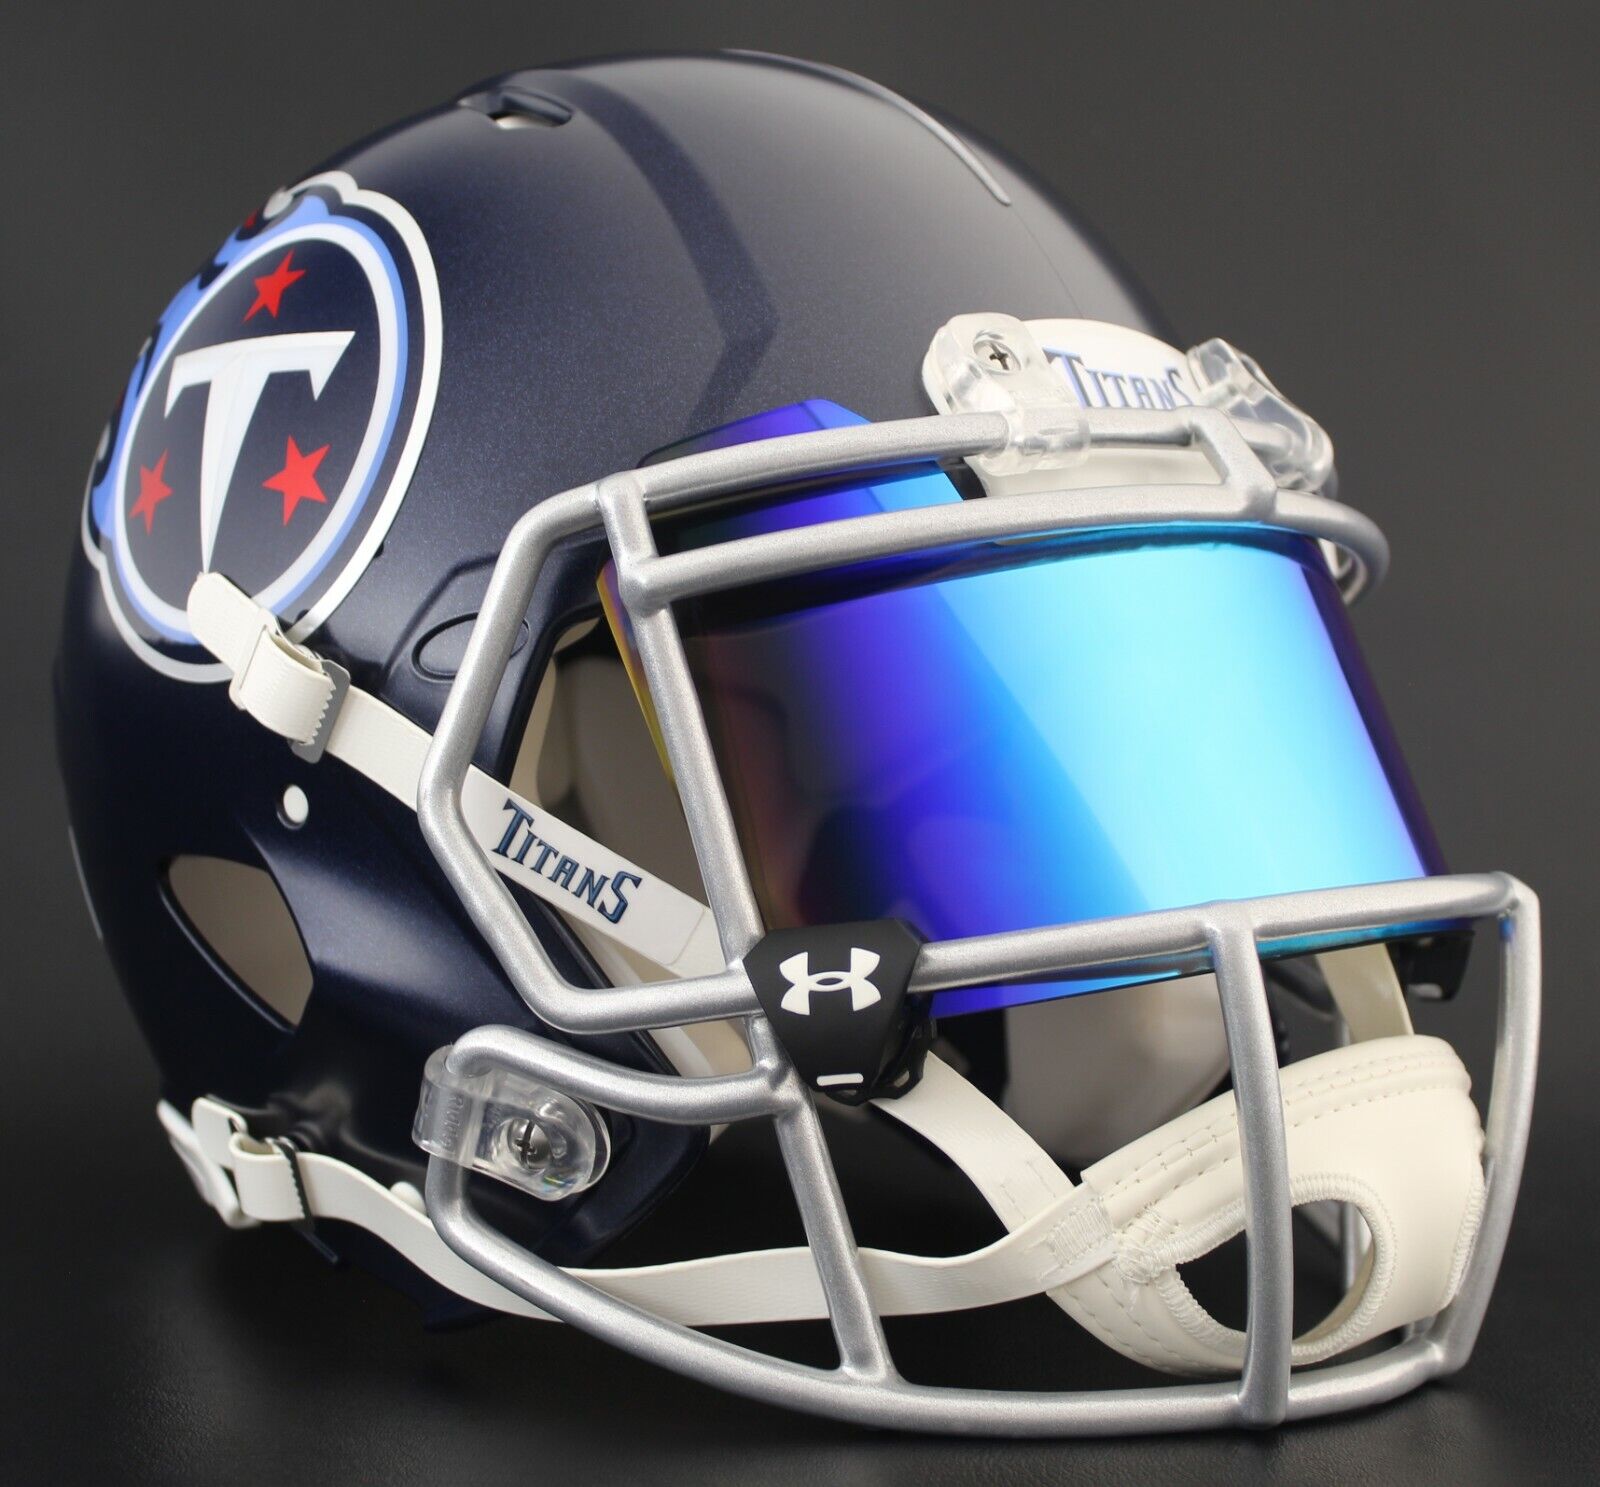 TENNESSEE TITANS NFL Gameday REPLICA Football Helmet w/ Eye Shield Visor